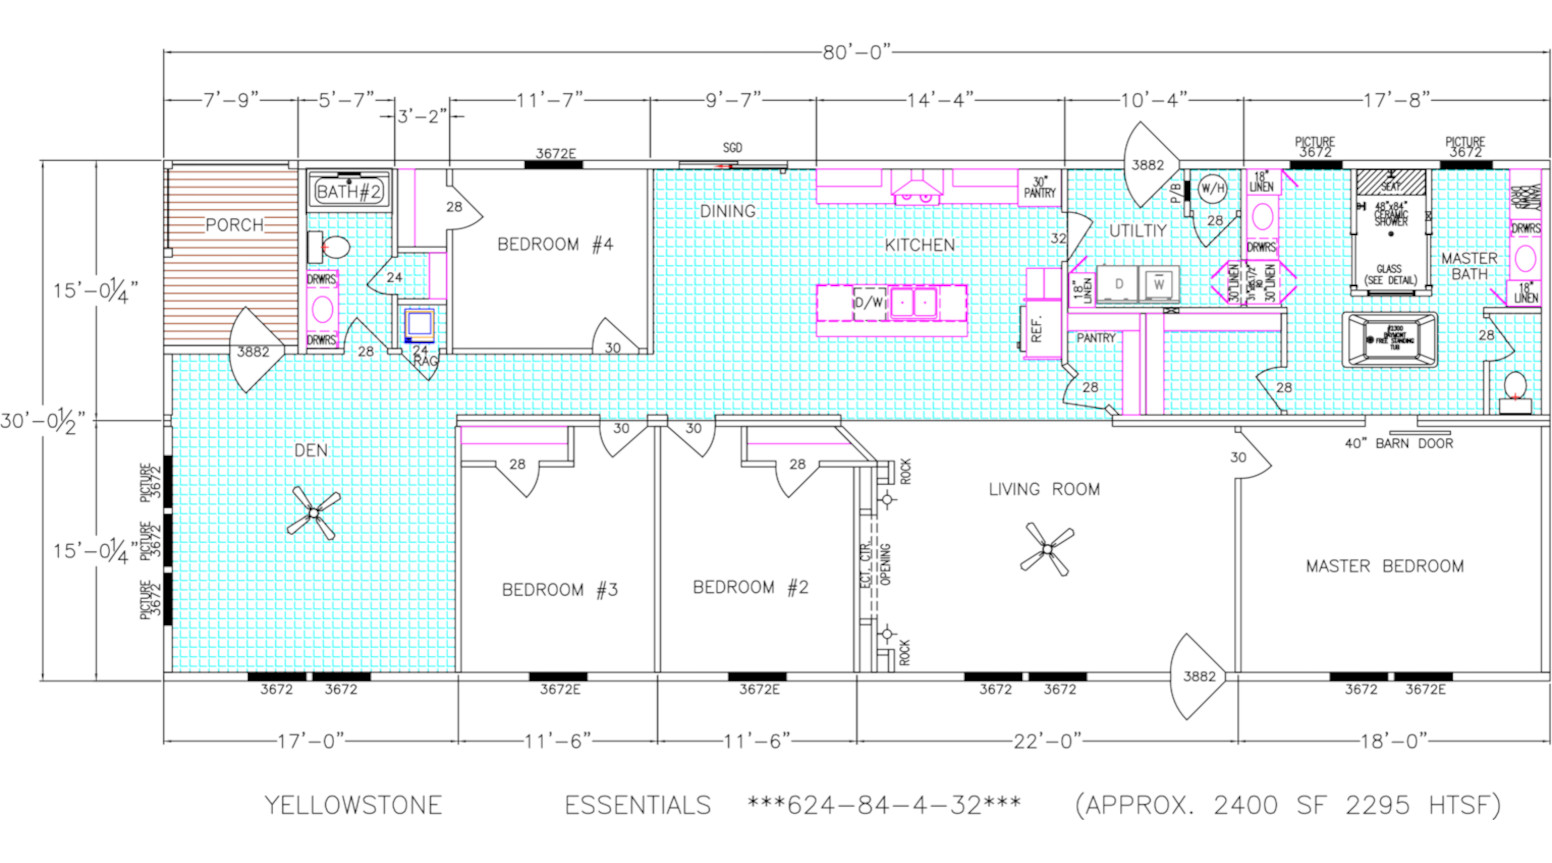 Yellowstone 80' Dimensioned Floorplan